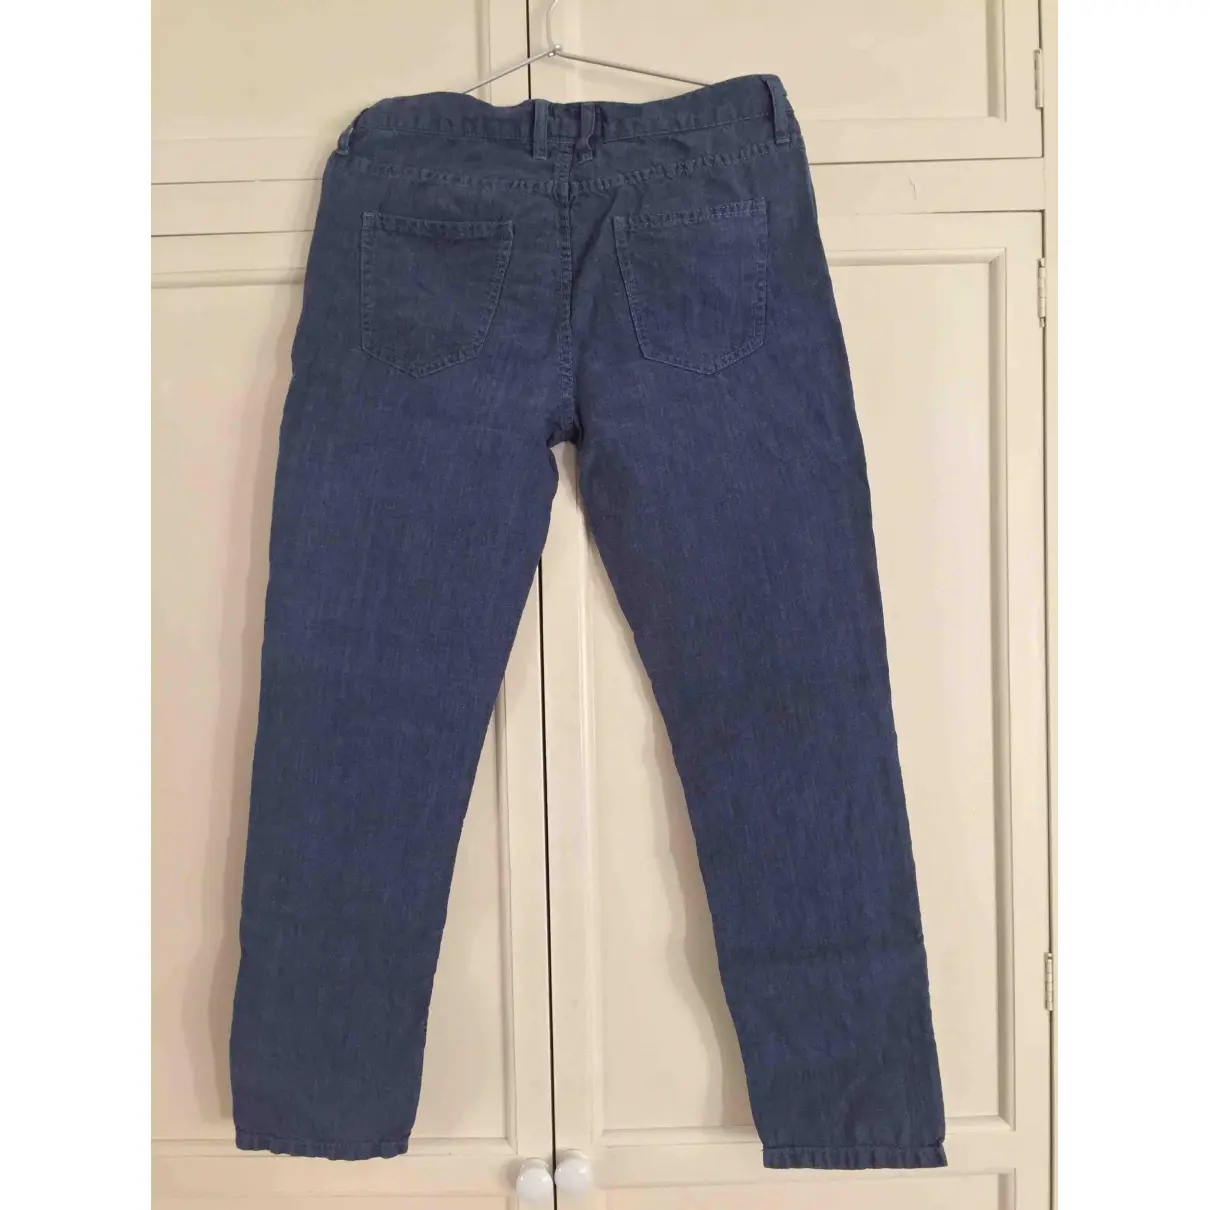 Buy Current Elliott Linen trousers online